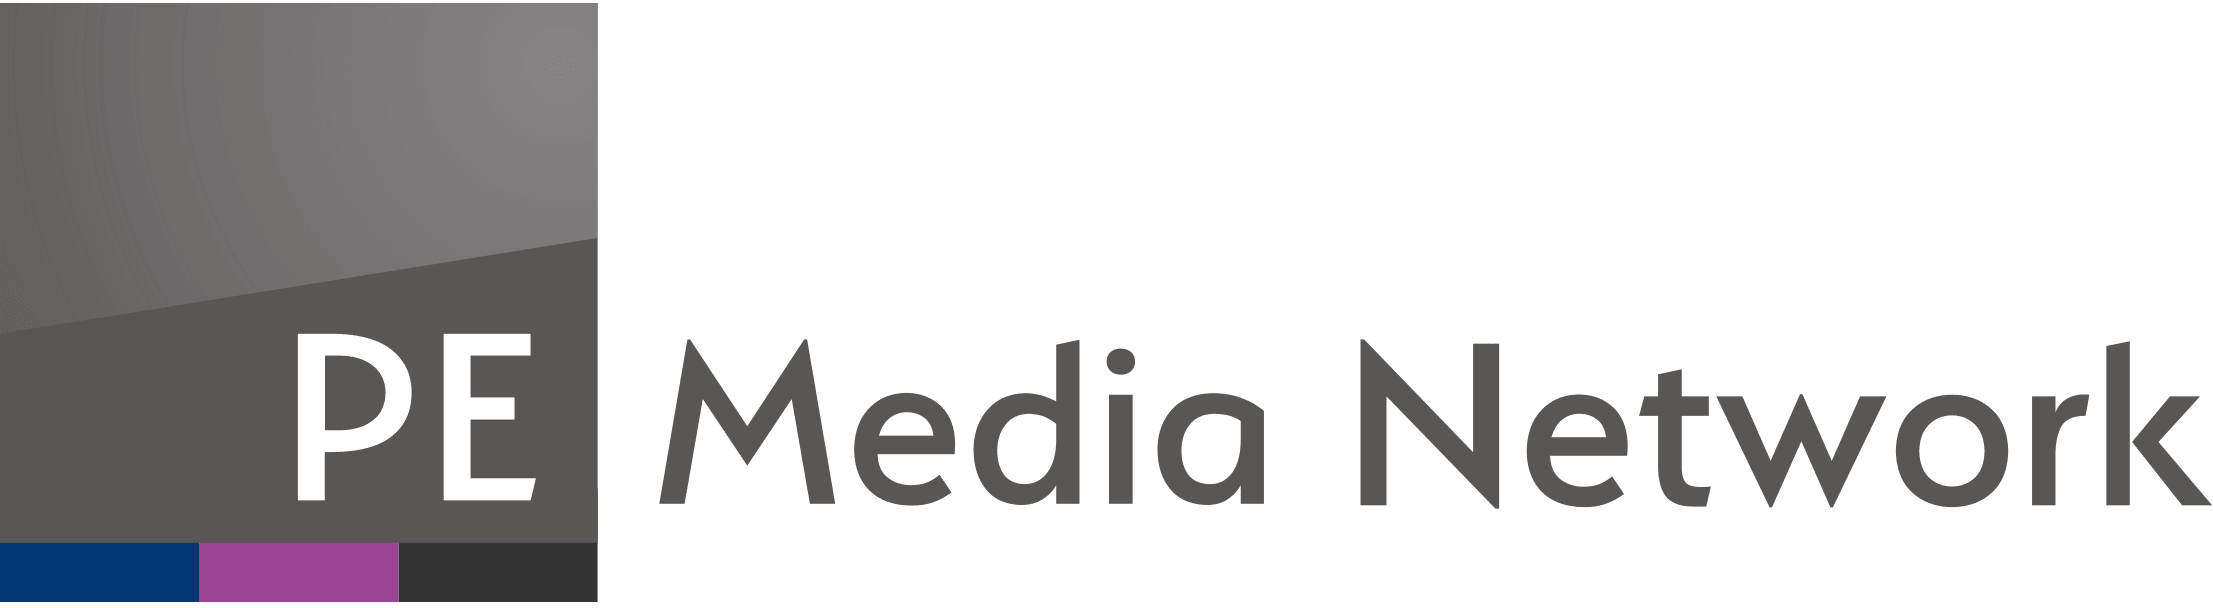 PE Media Network-icon